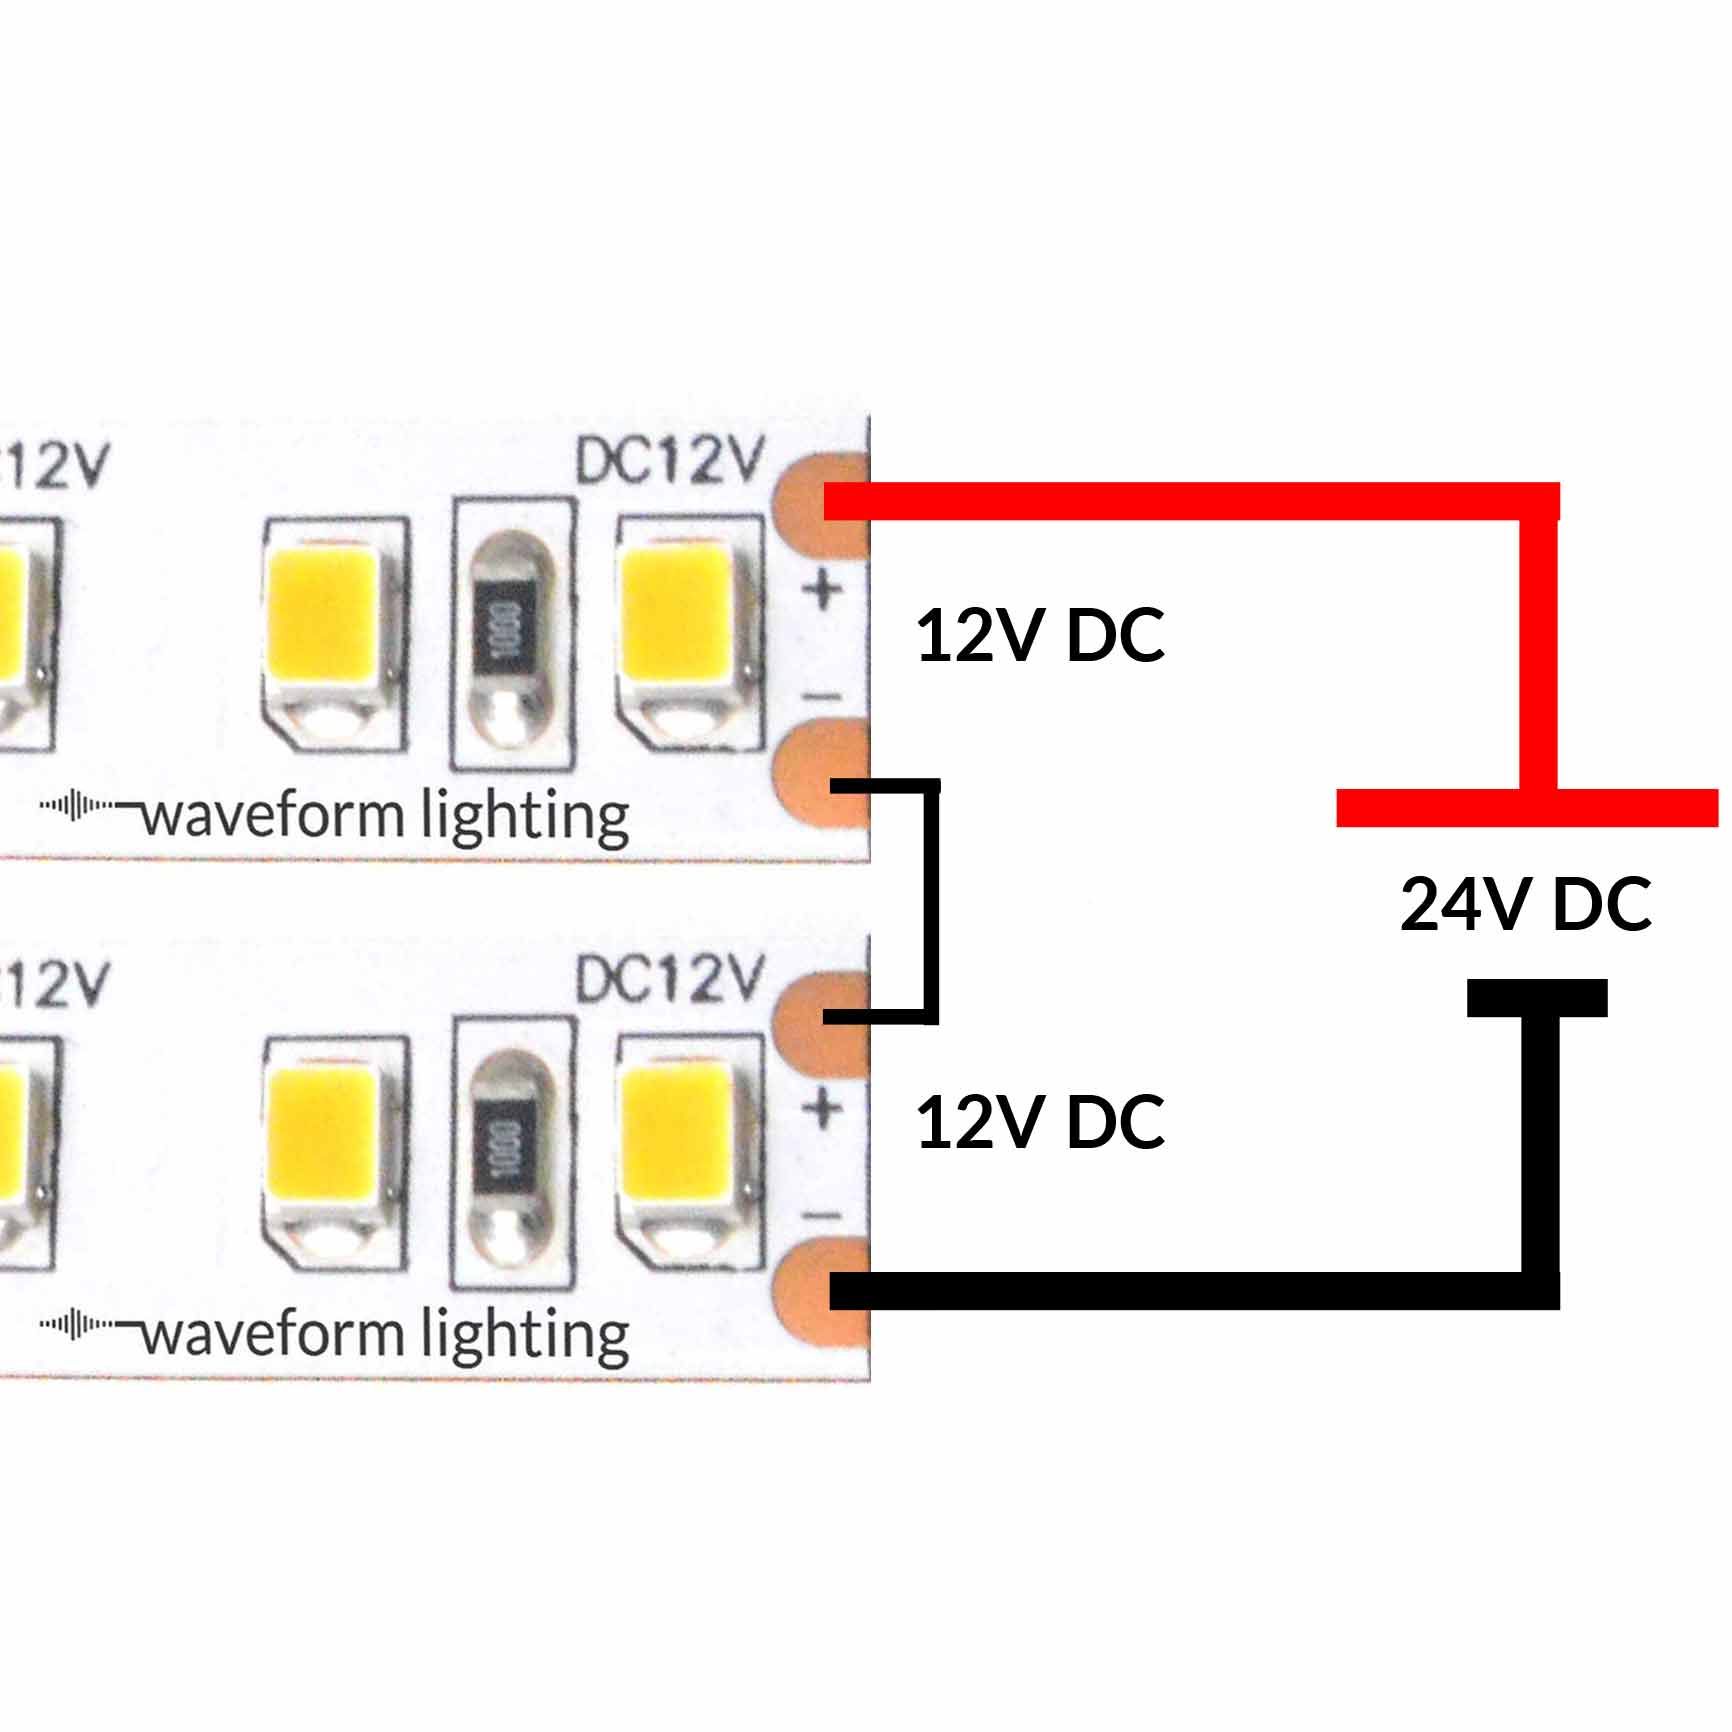 Using a 12V LED Strip in a 24V System